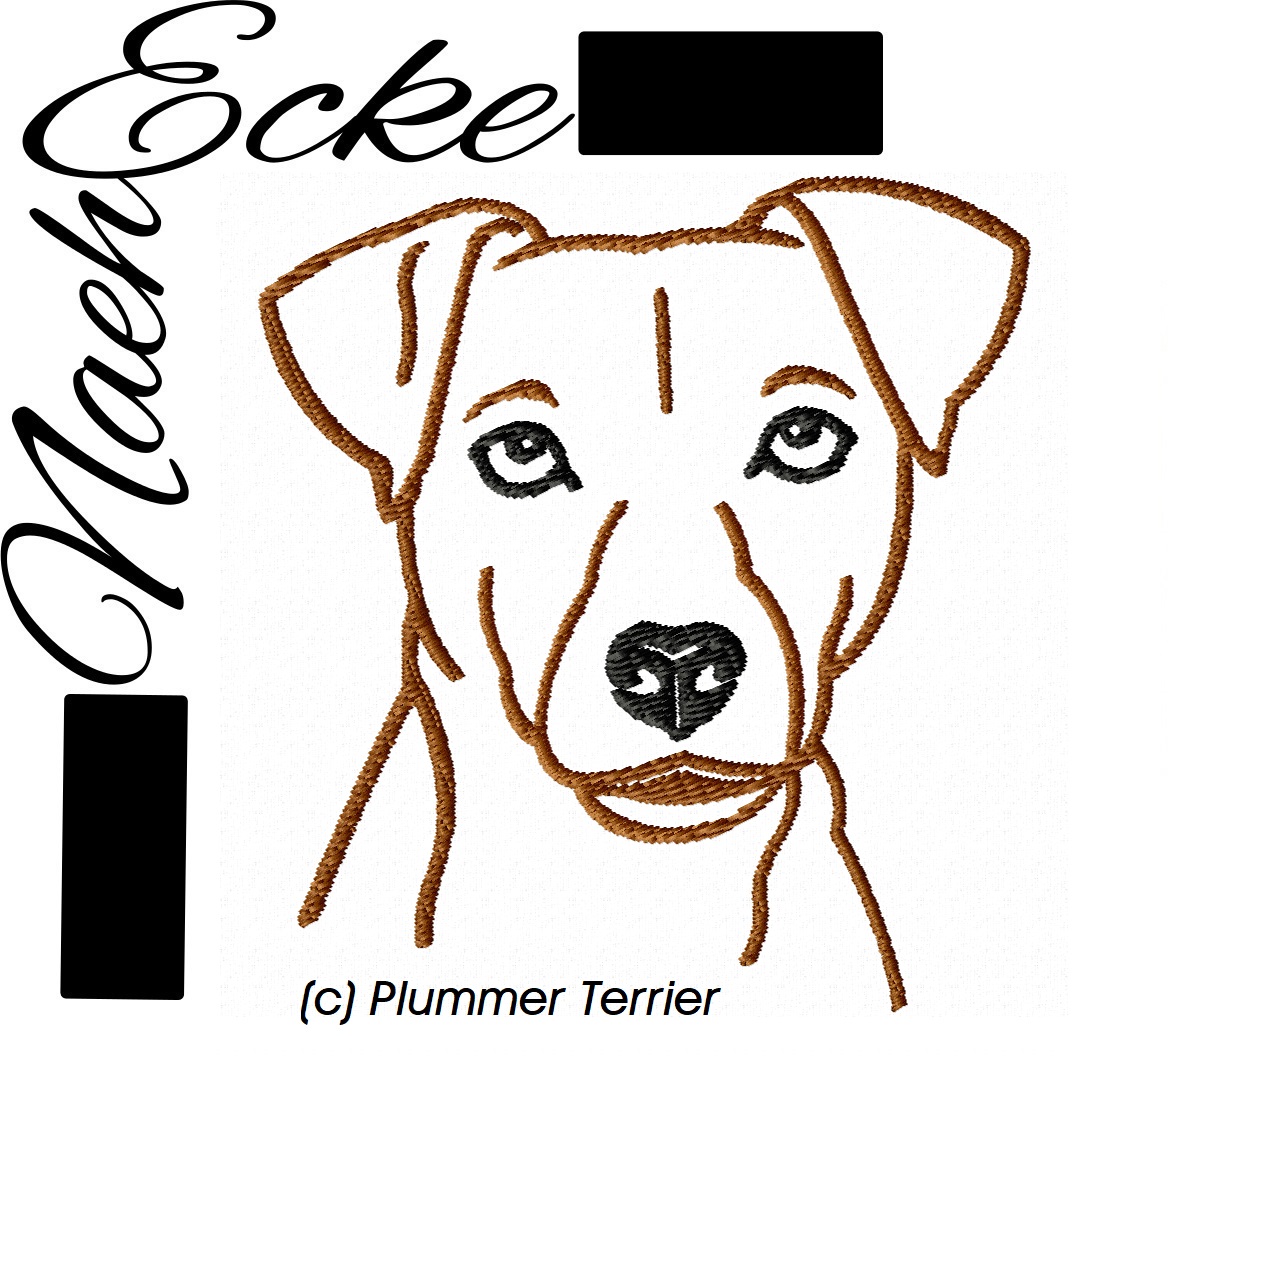 Plummer Terrier